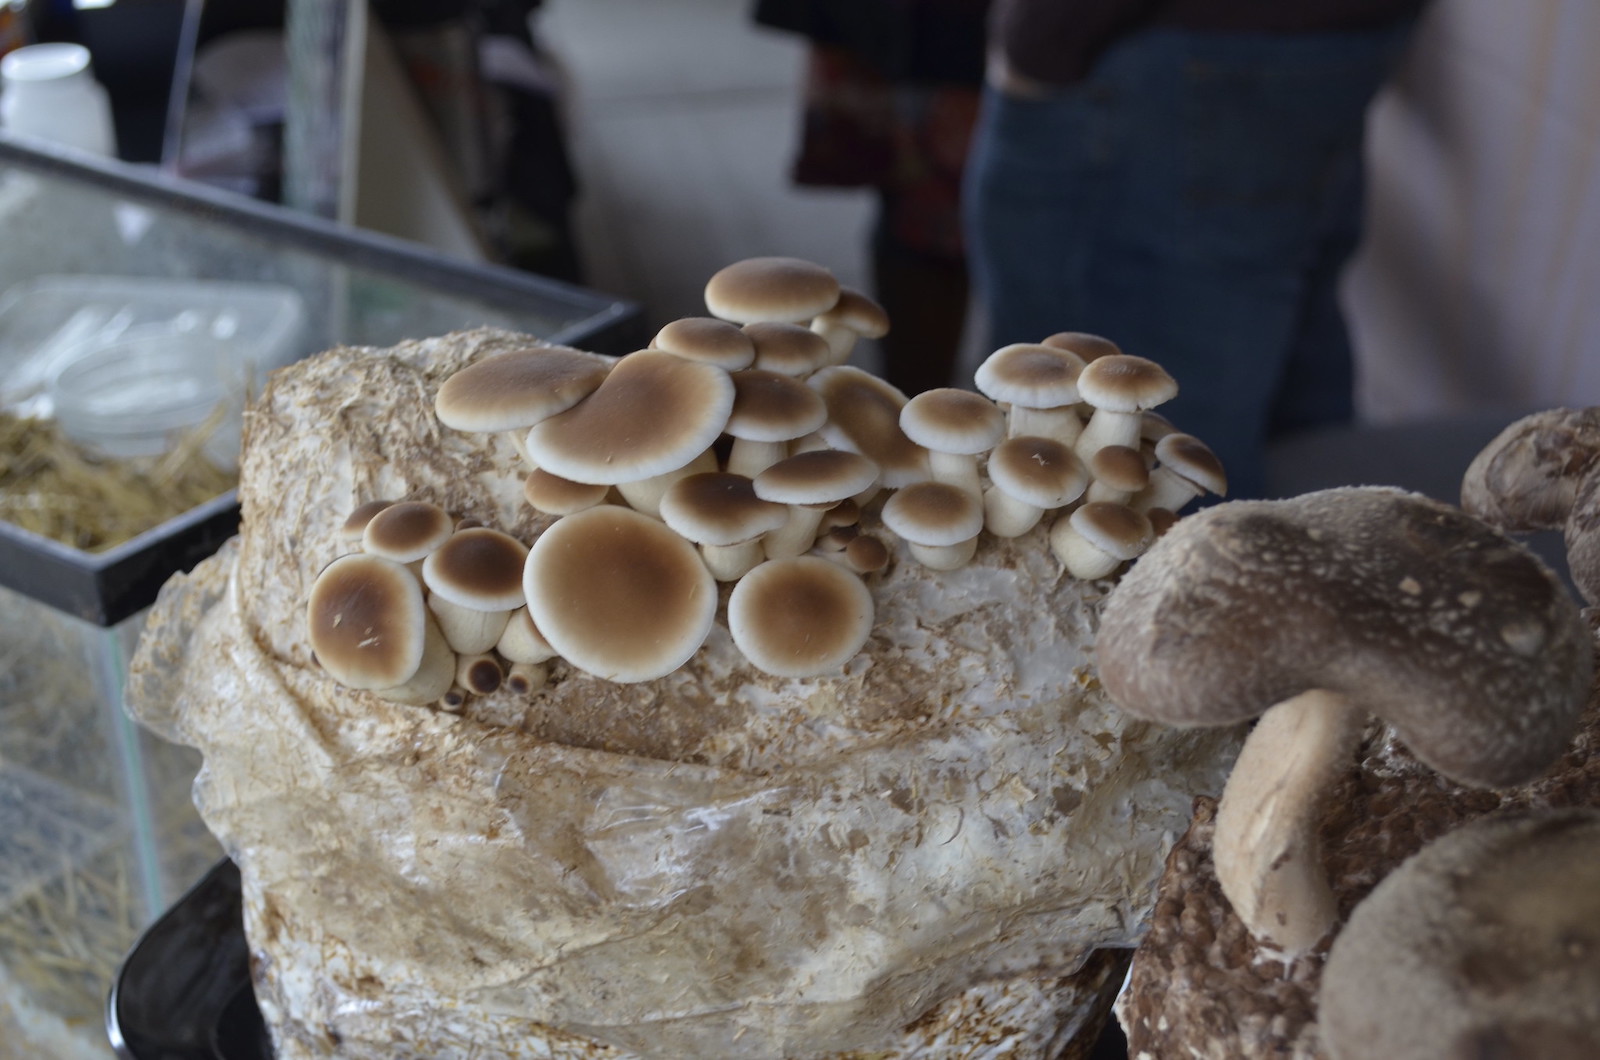 Why growing fungi at home is beginning to mushroom, Fungi